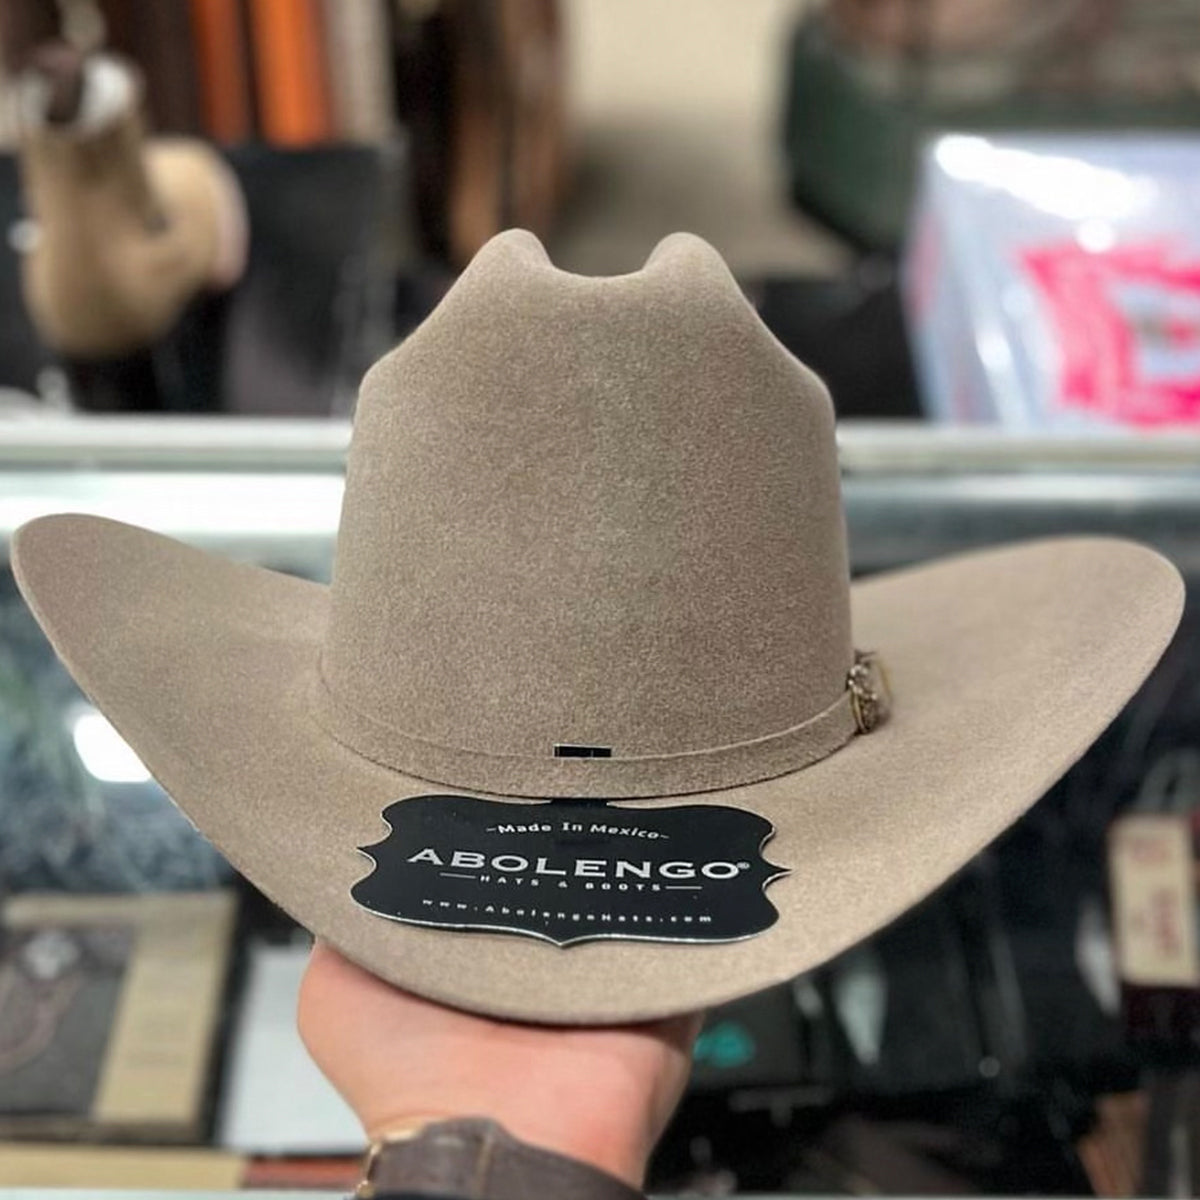 Abolengo Rancheron 1000x Natural Cowboy Felt Hat